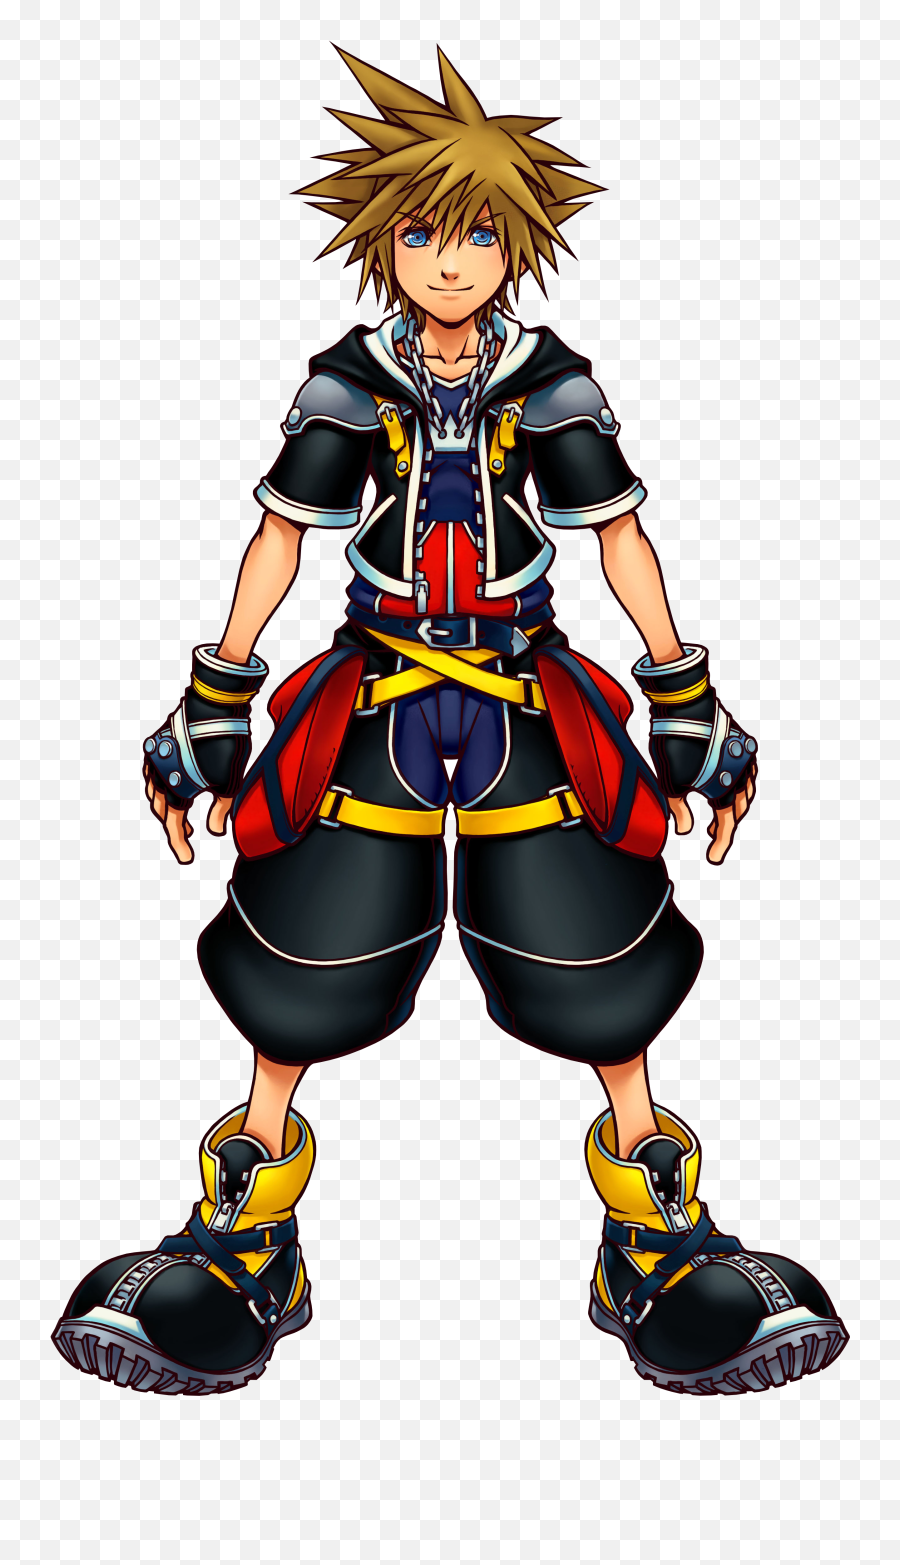 Sora From Kingdom Hearts Png Image - Kingdom Hearts Iii Sora,Kingdom Hearts Png